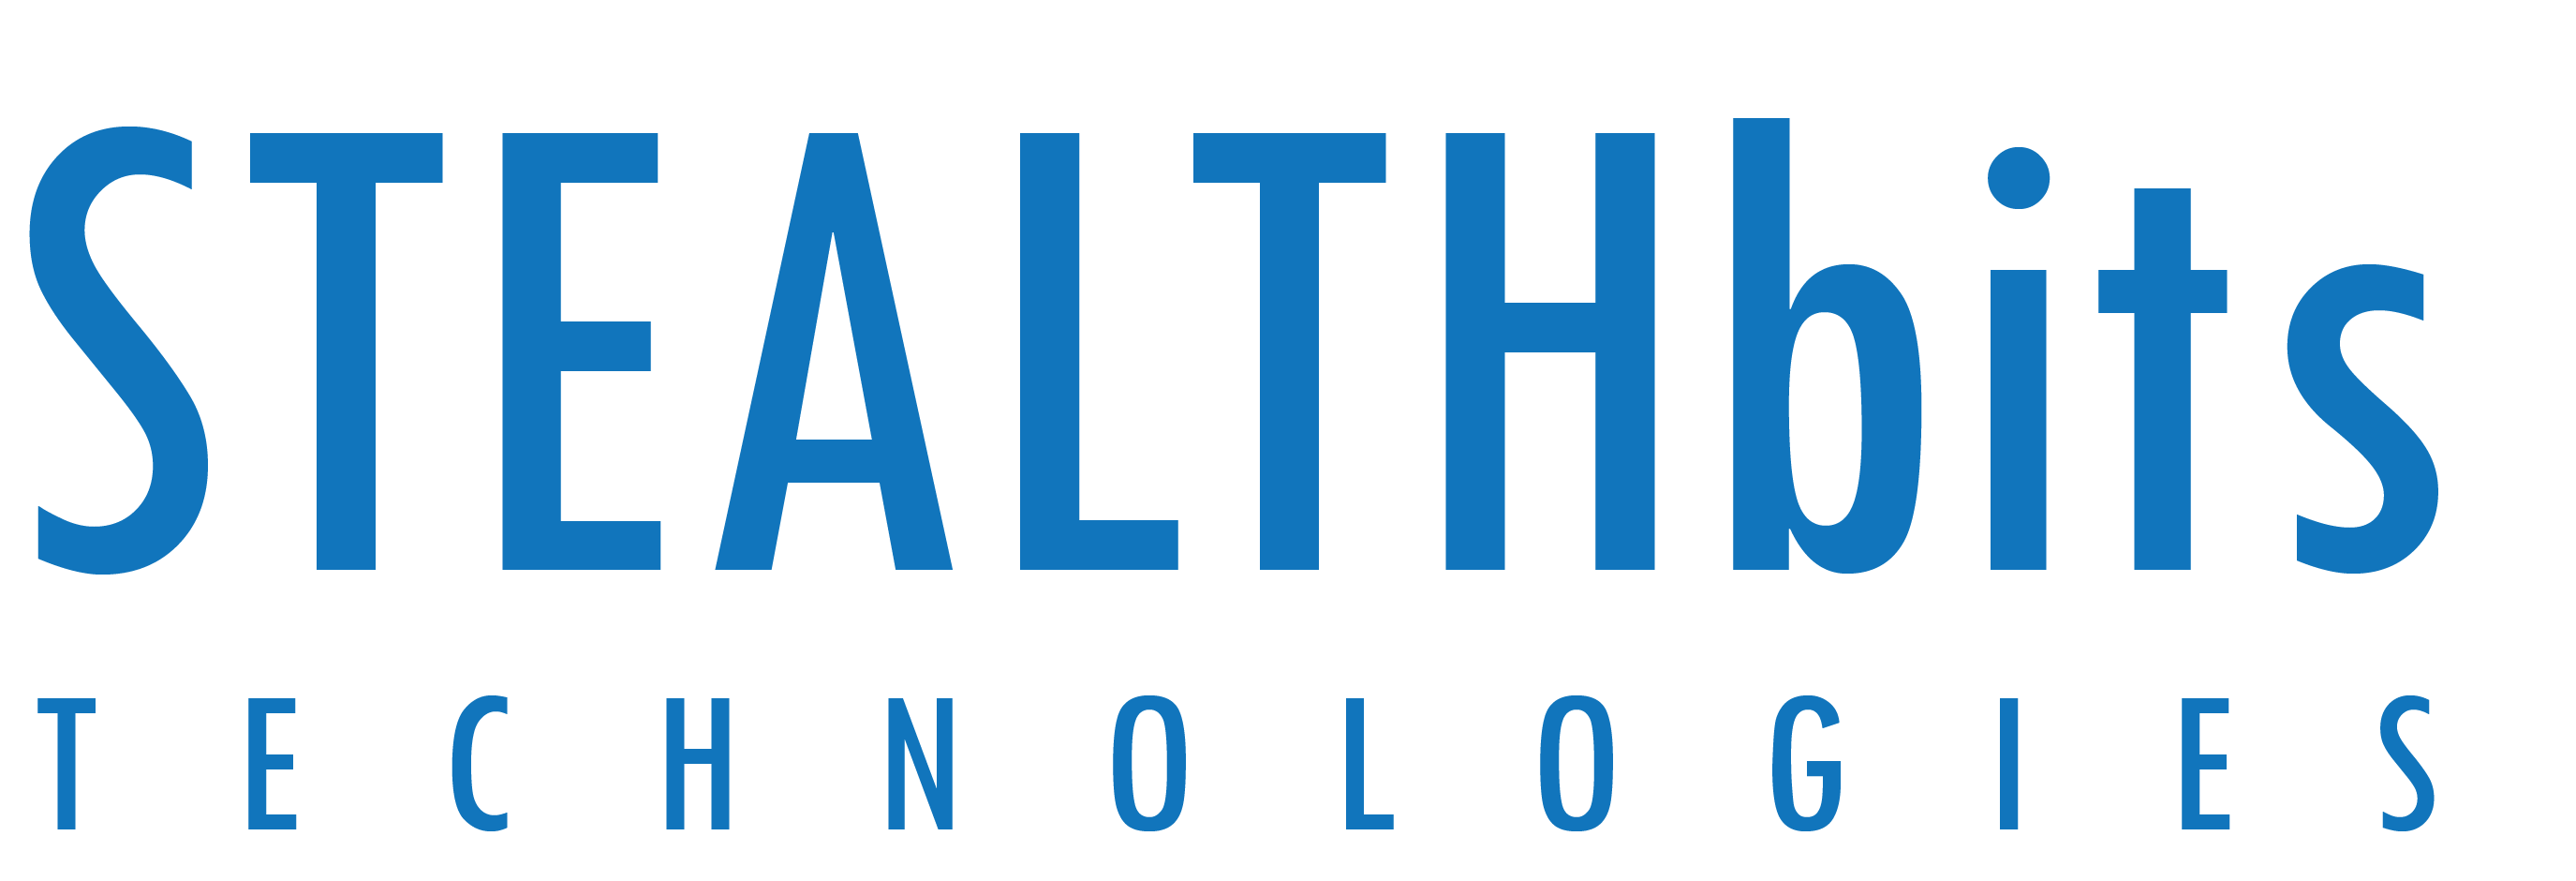 STEALTHbits Logo - Blue